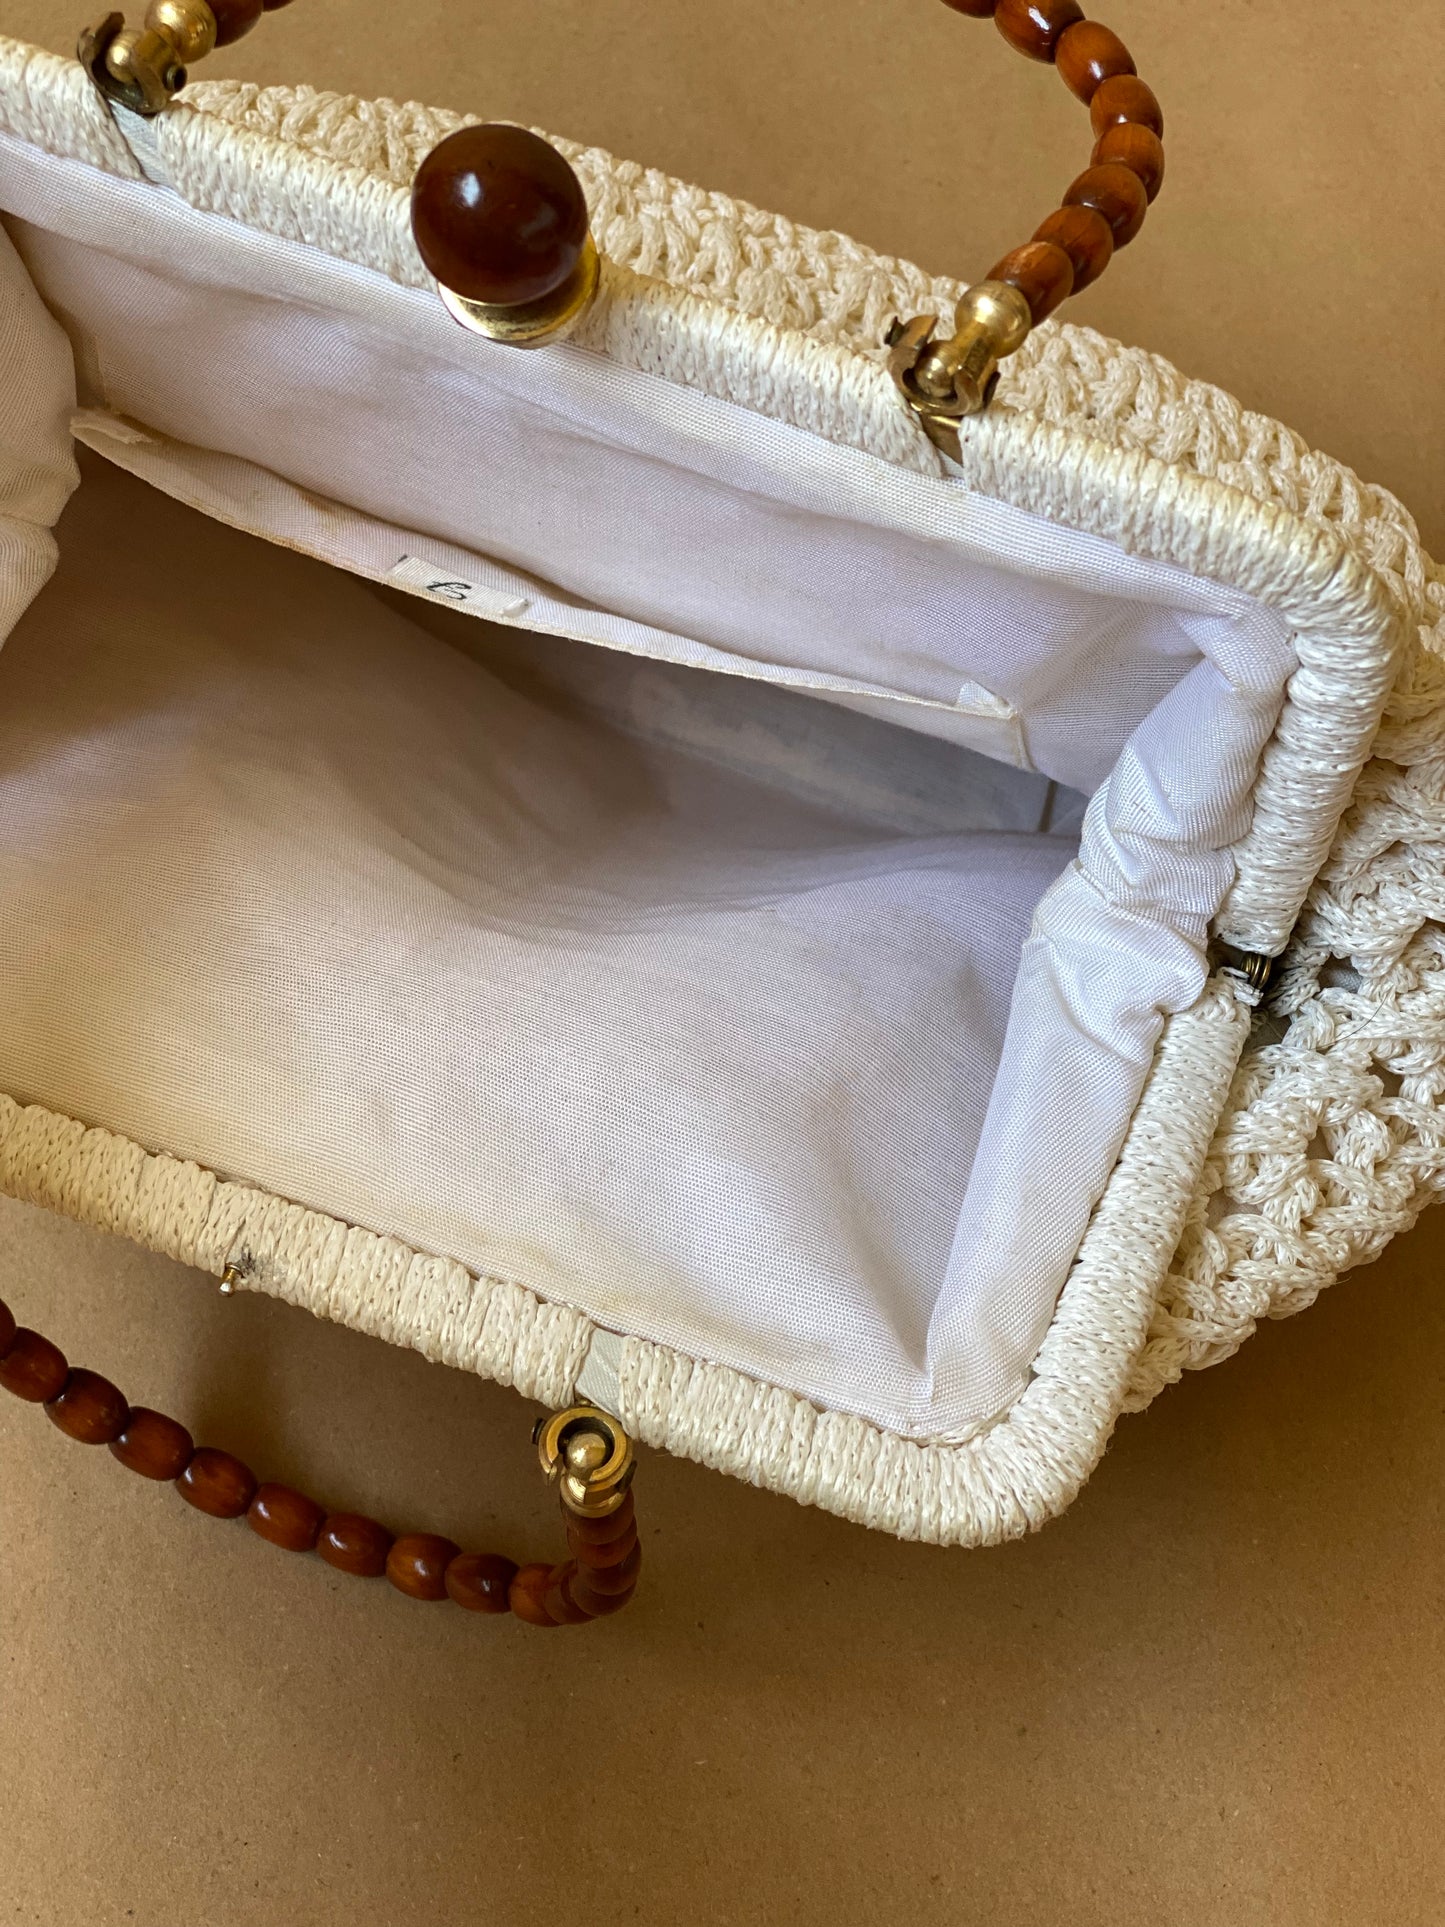 Vintage White Beaded Handle Handbag